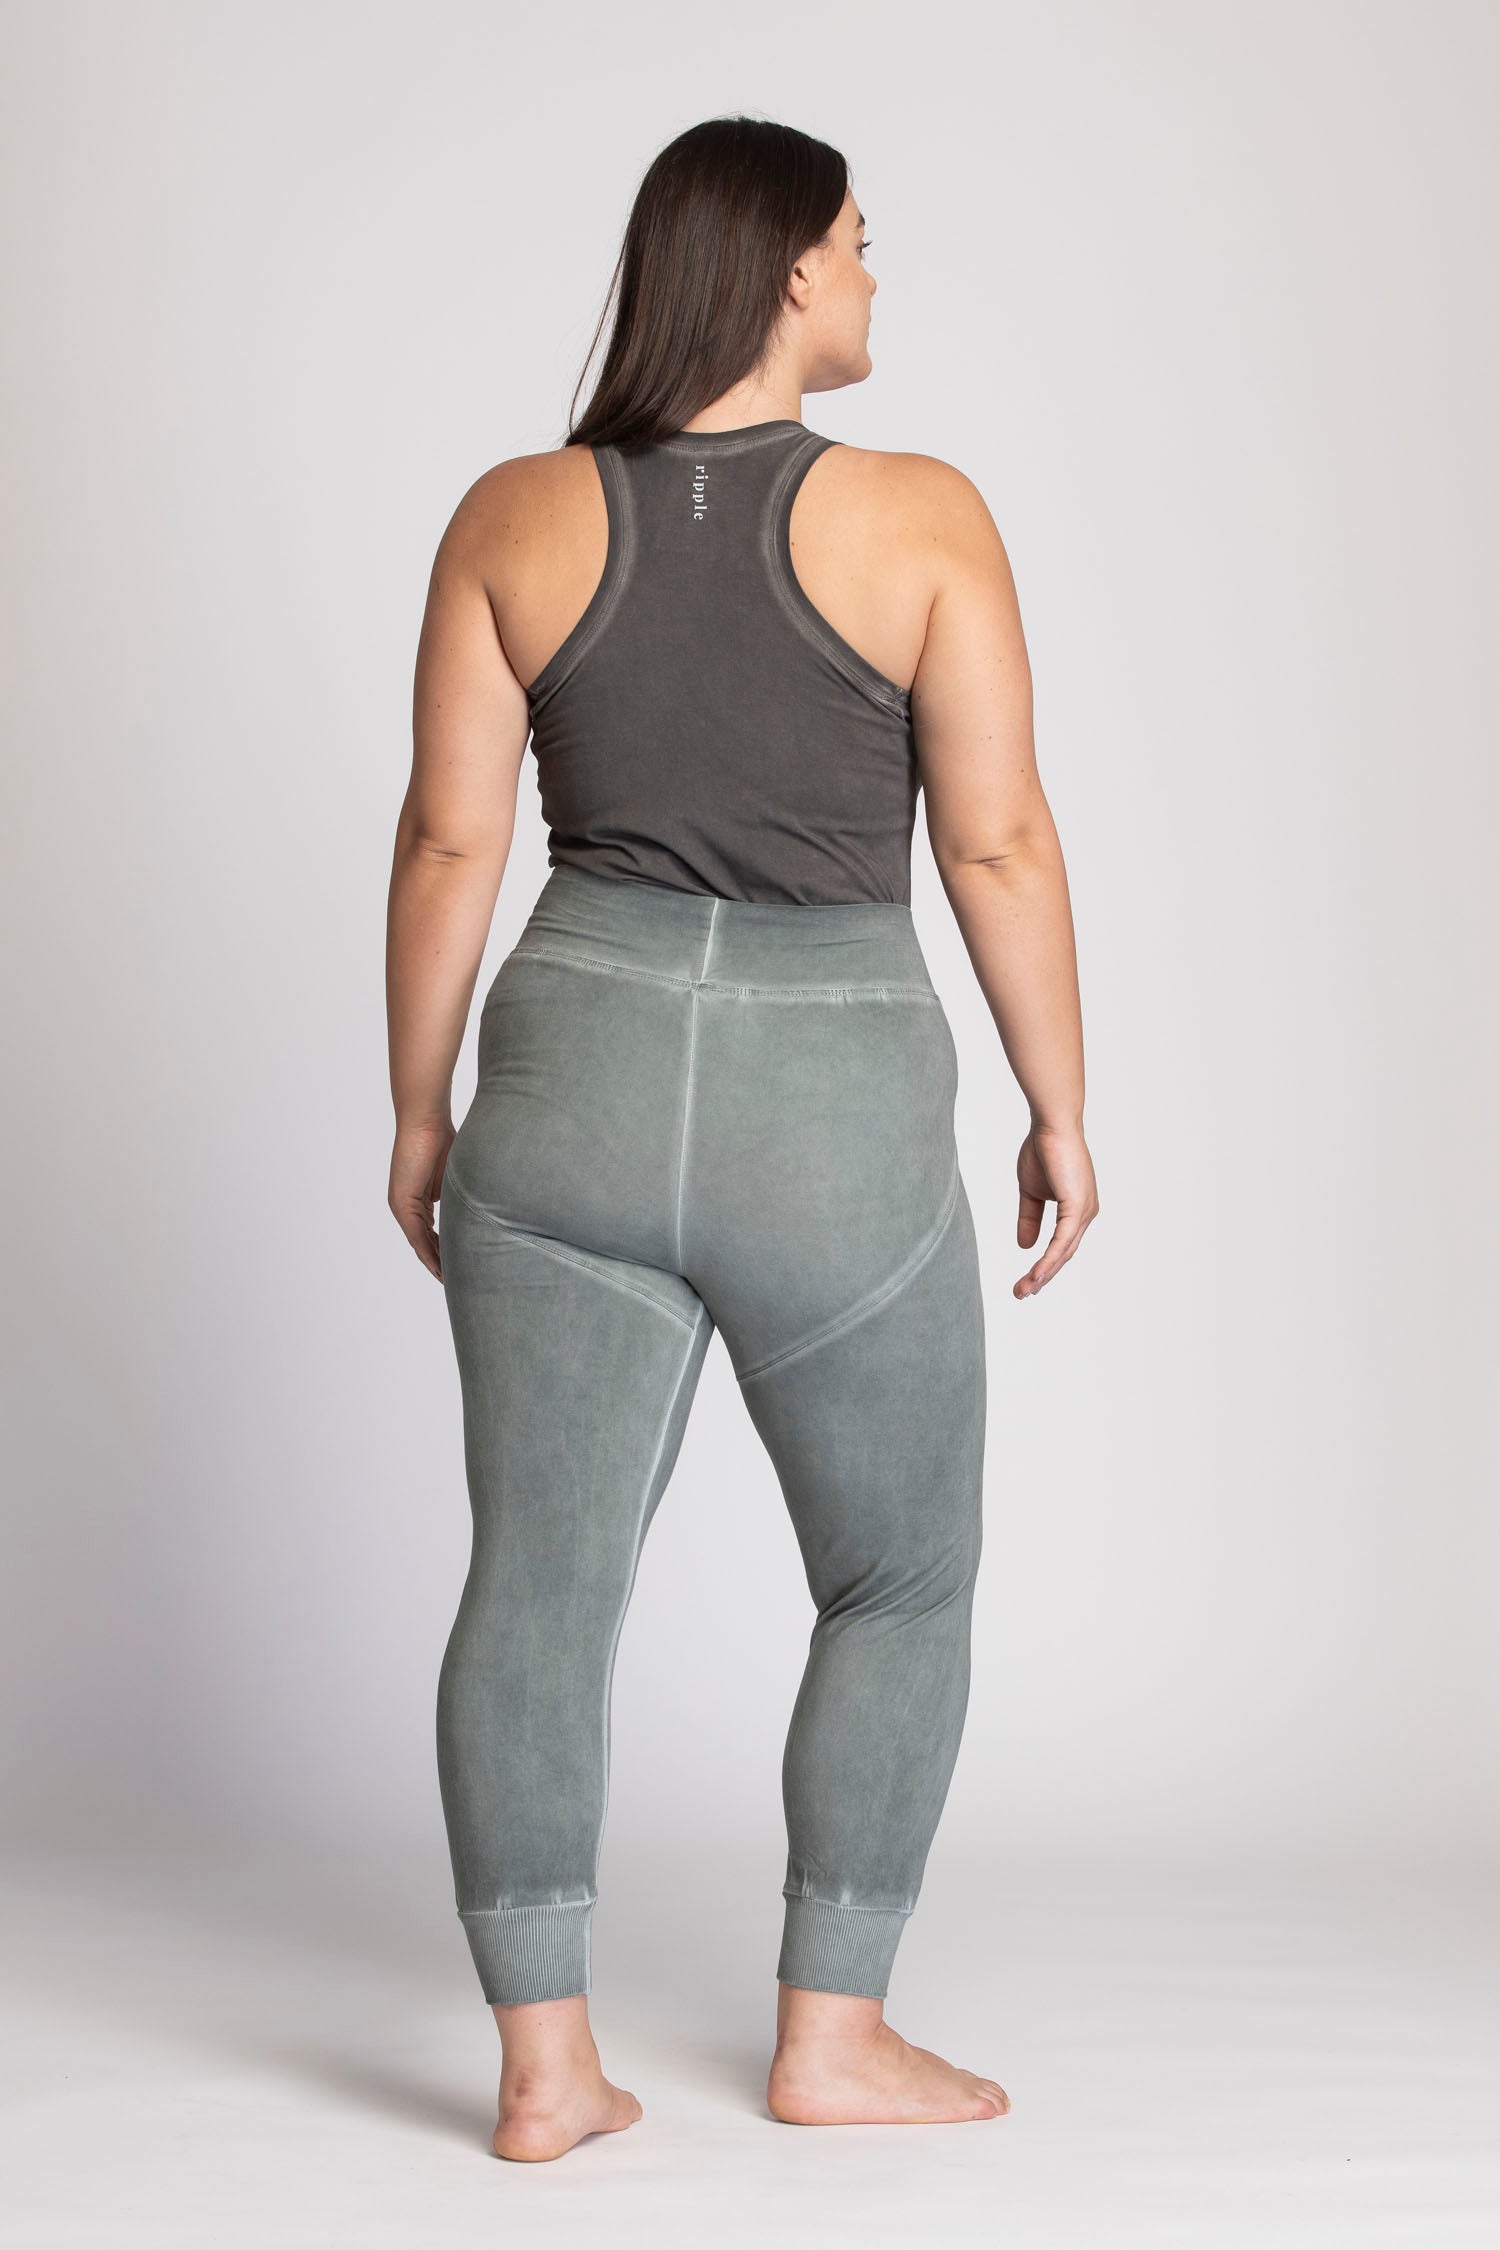 Buy Plus Size Ruffled Cuffed Capris-yoga Pants-hand Dyed Organic